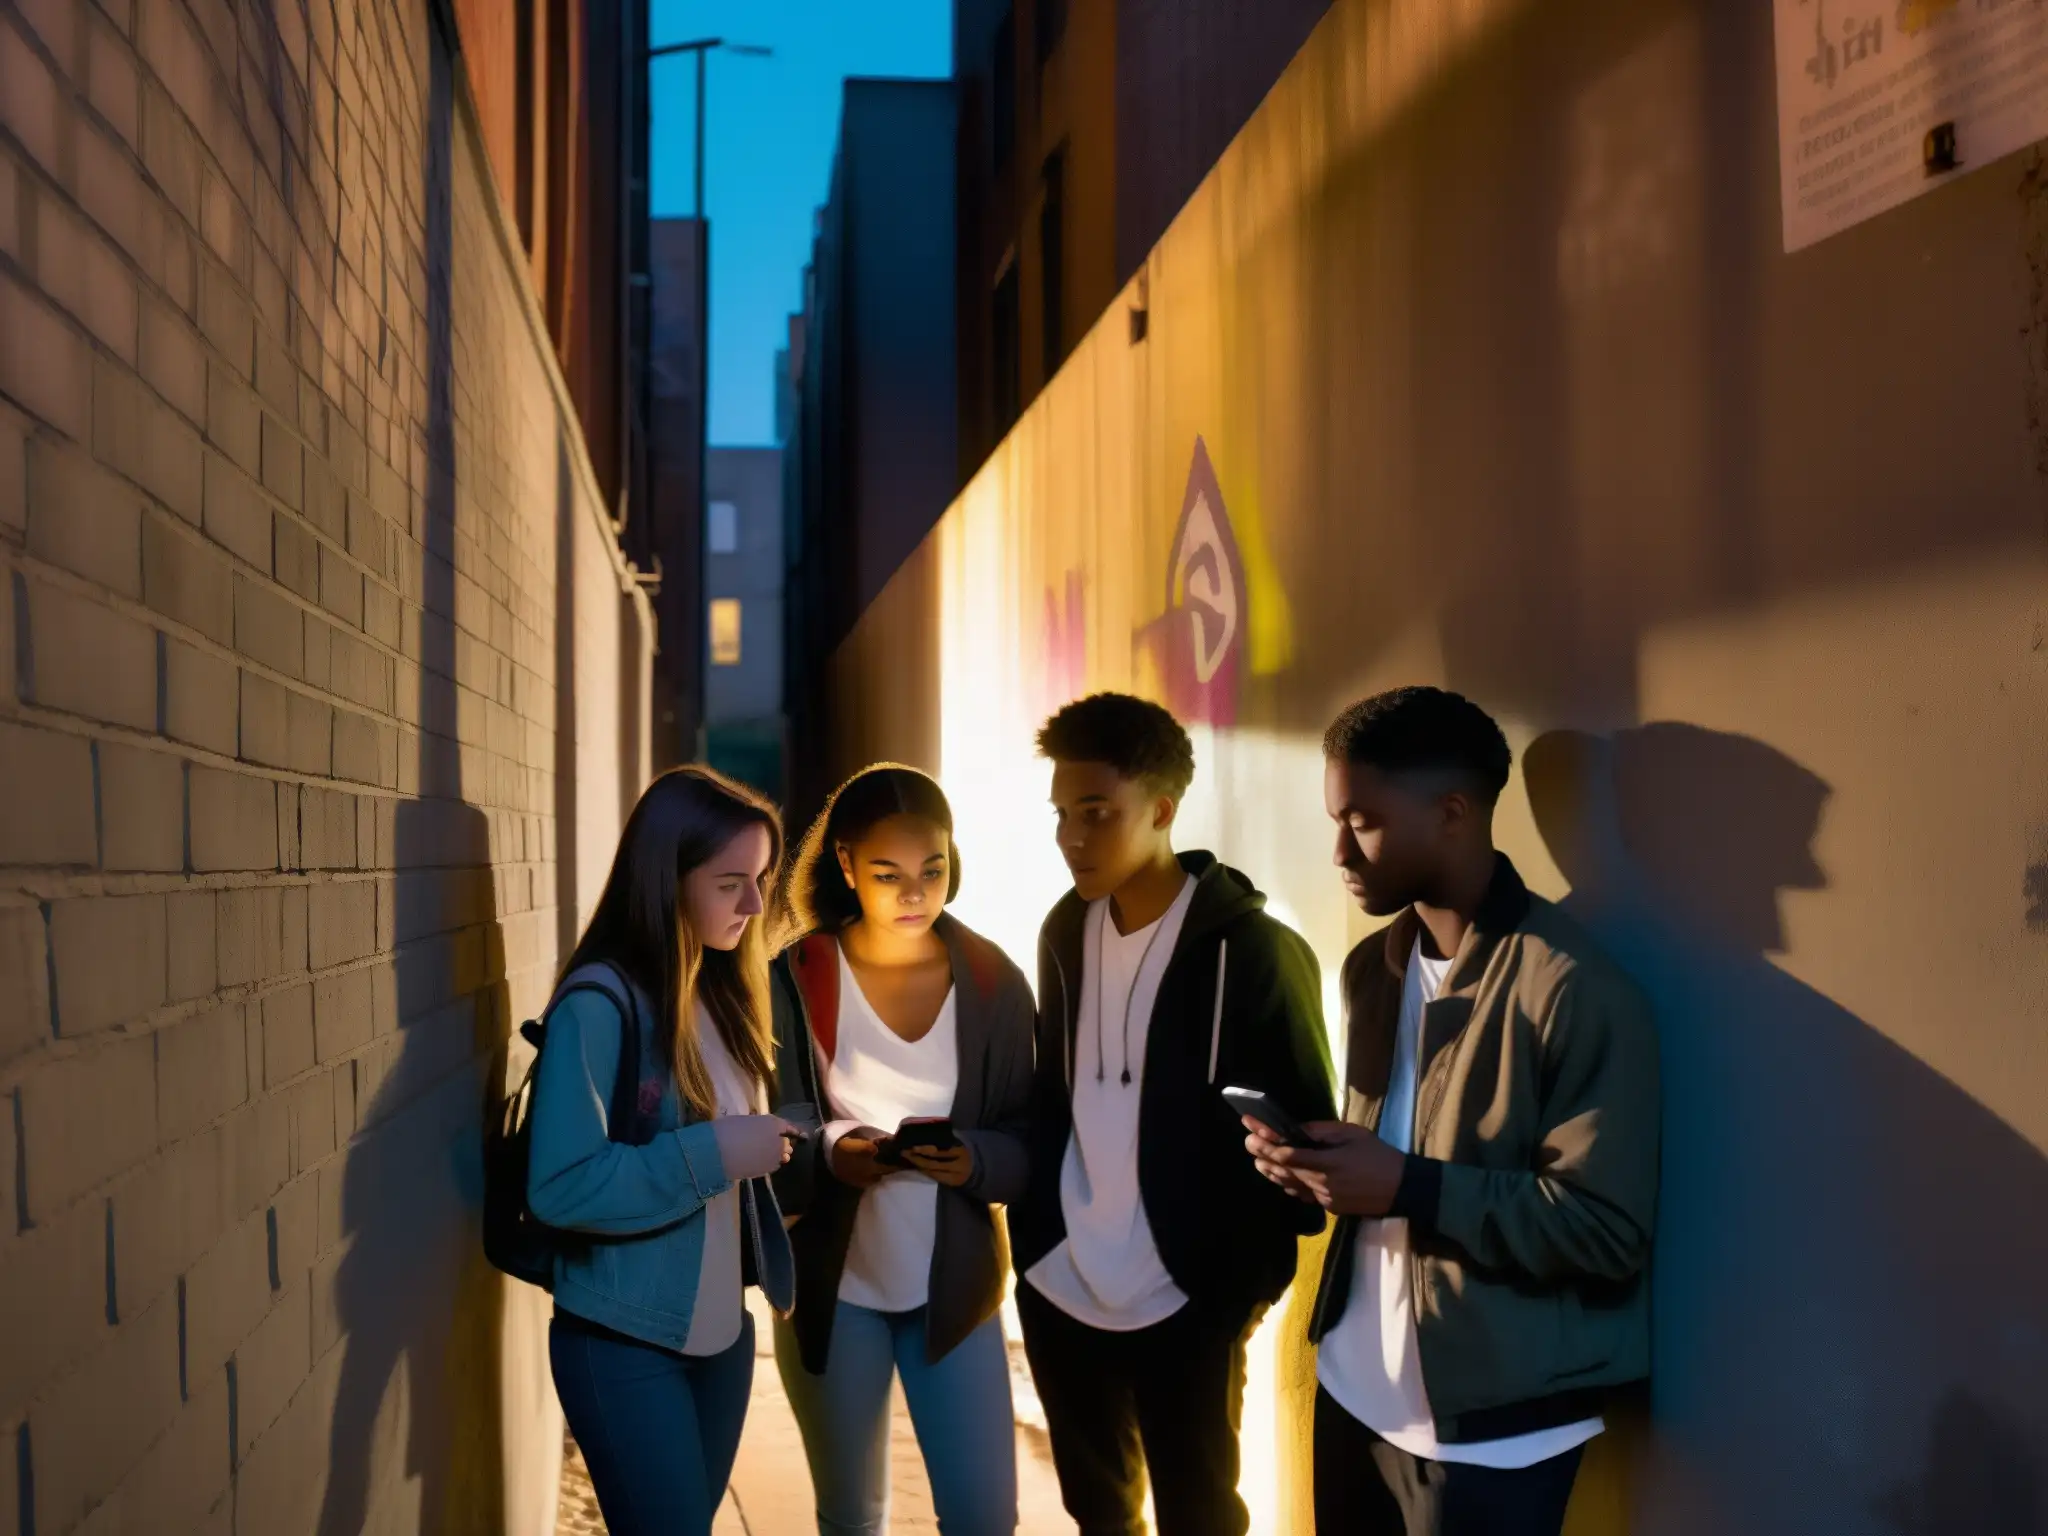 Un grupo de jóvenes escucha un cuento de terror en un callejón oscuro, iluminados por sus celulares